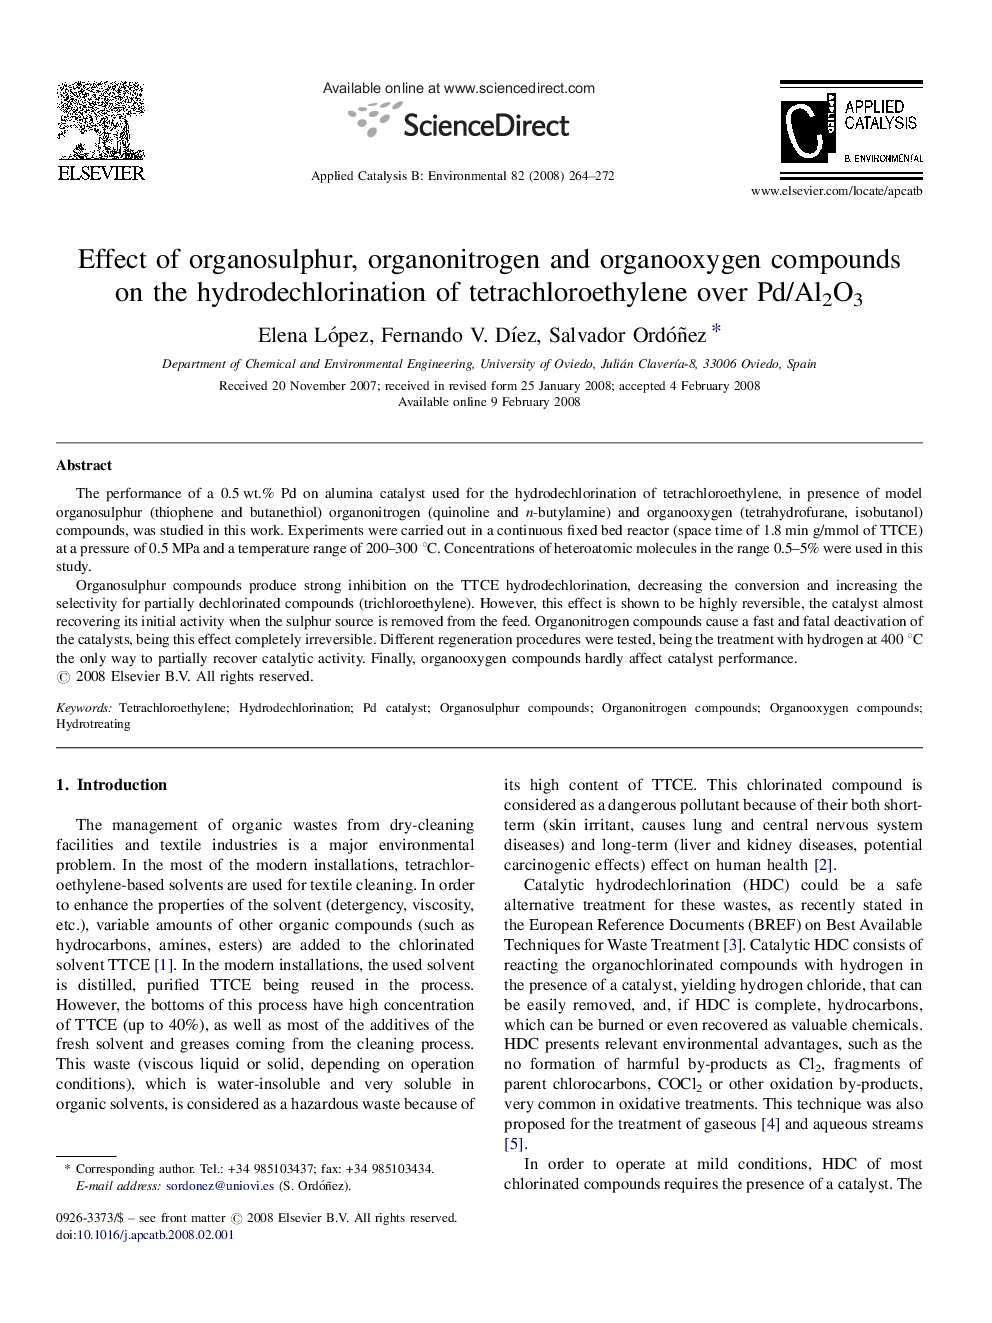 Effect of organosulphur, organonitrogen and organooxygen compounds on the hydrodechlorination of tetrachloroethylene over Pd/Al2O3